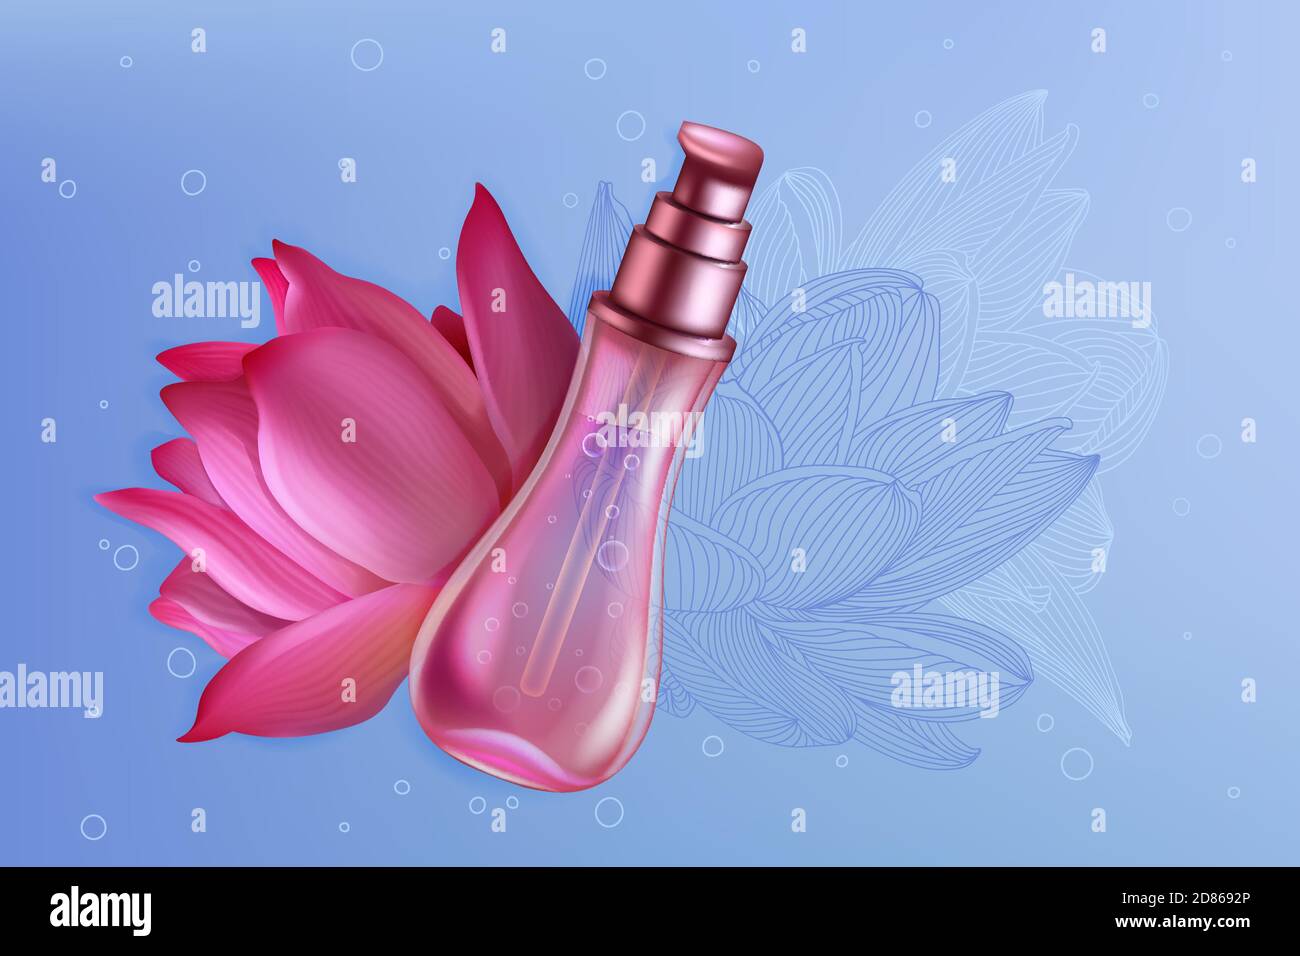 Realistic Perfume Bottle Design Stock Illustration - Download Image Now -  Advertisement, Aromatherapy, Beauty - iStock